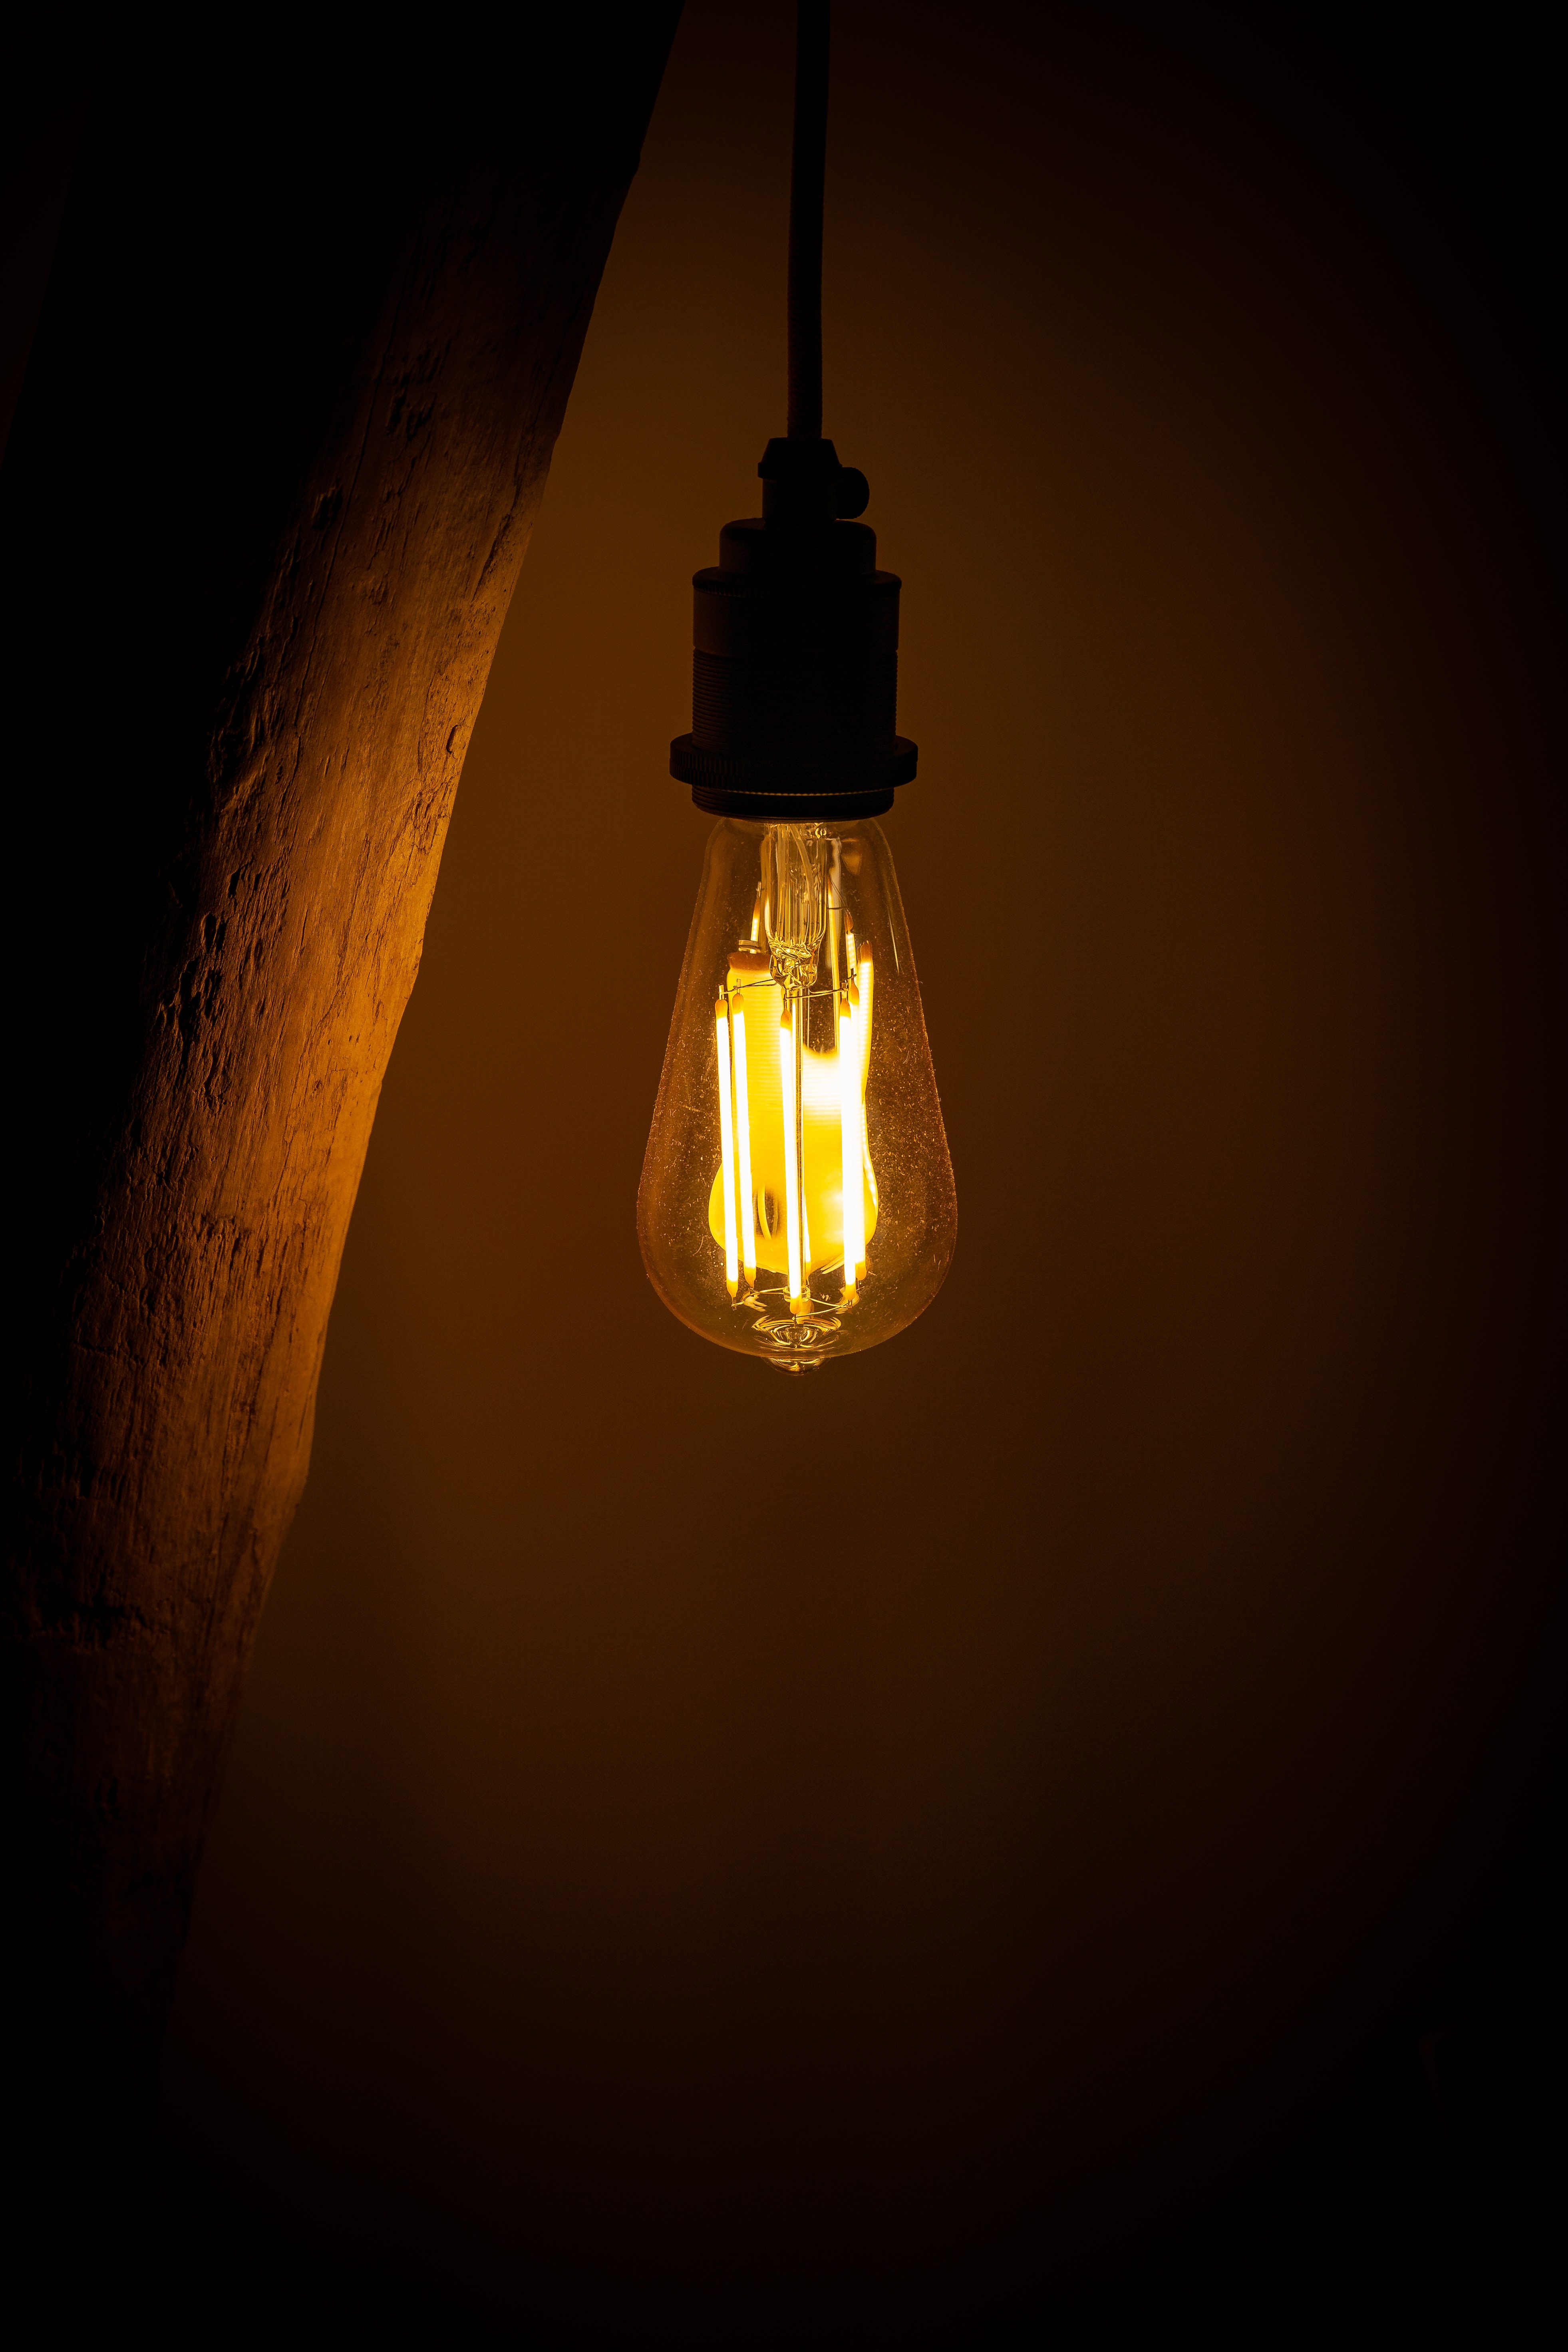 dark, lamp, lighting, electricity, illumination, light bulb